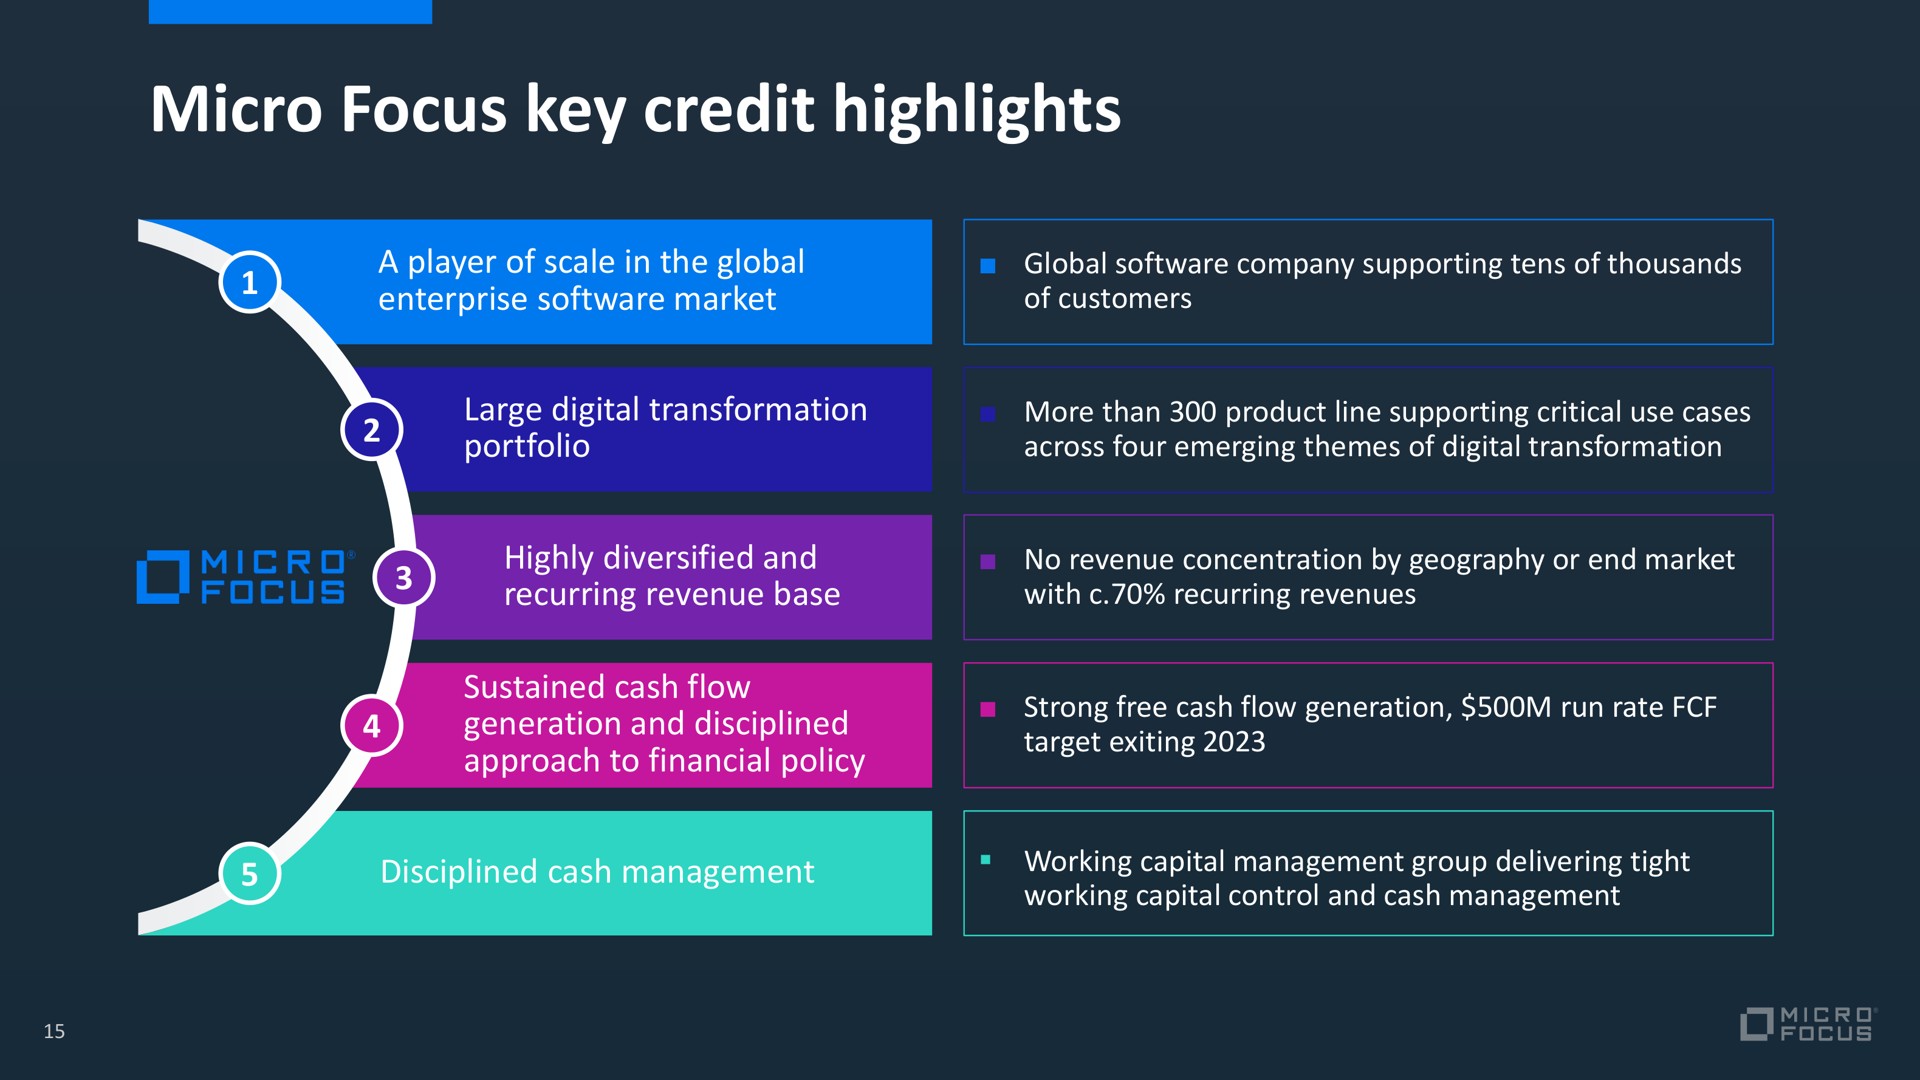 micro focus key credit highlights | Micro Focus